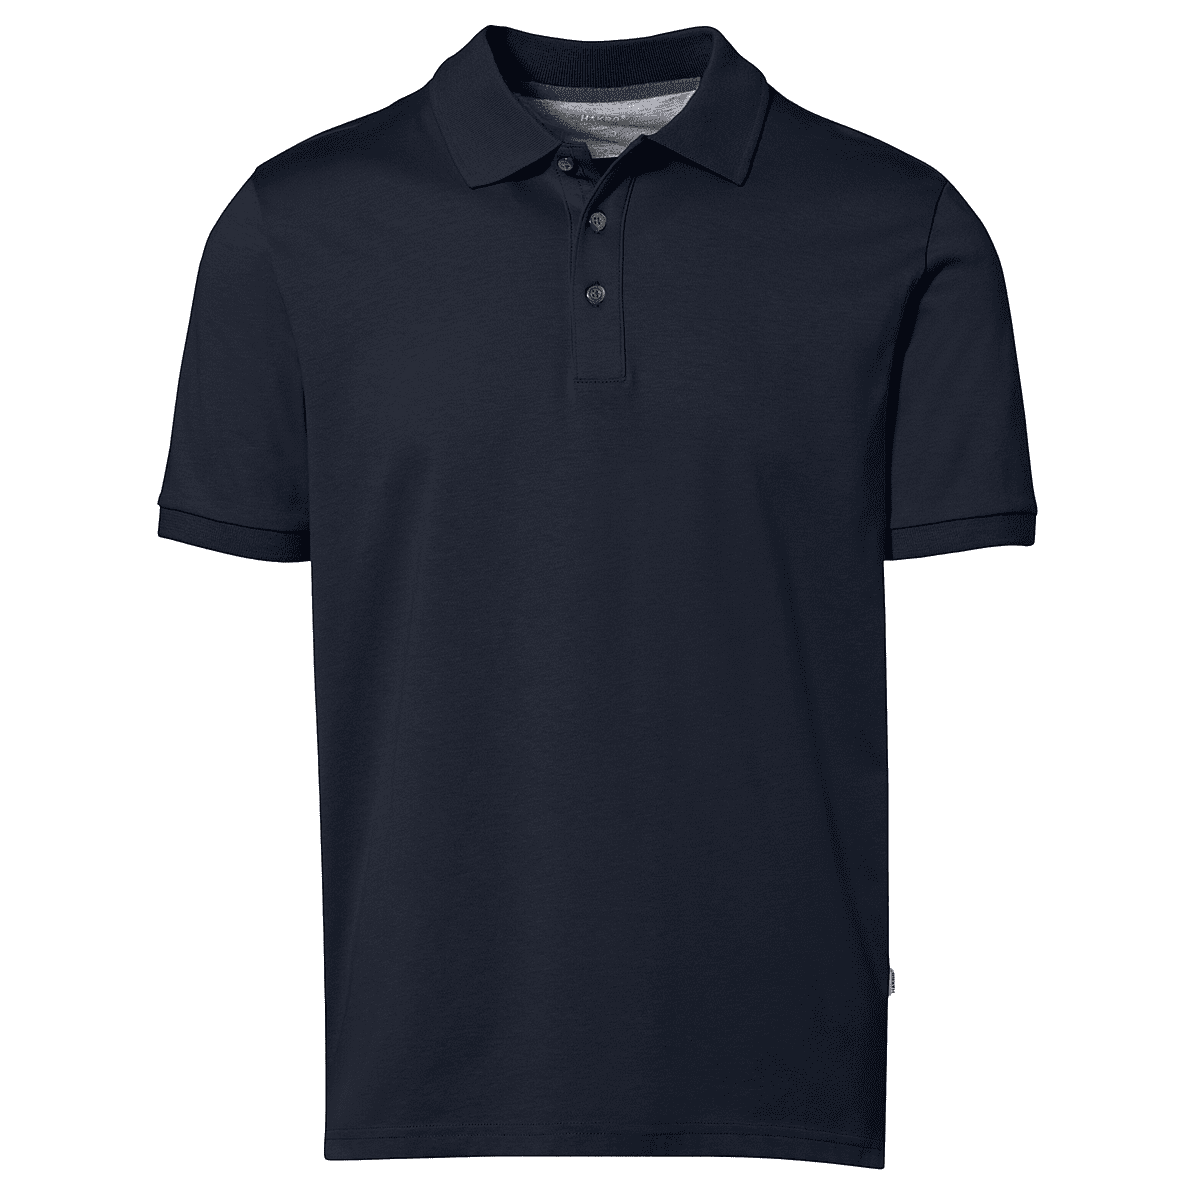 Herren Polo-Shirt Funktion Navy